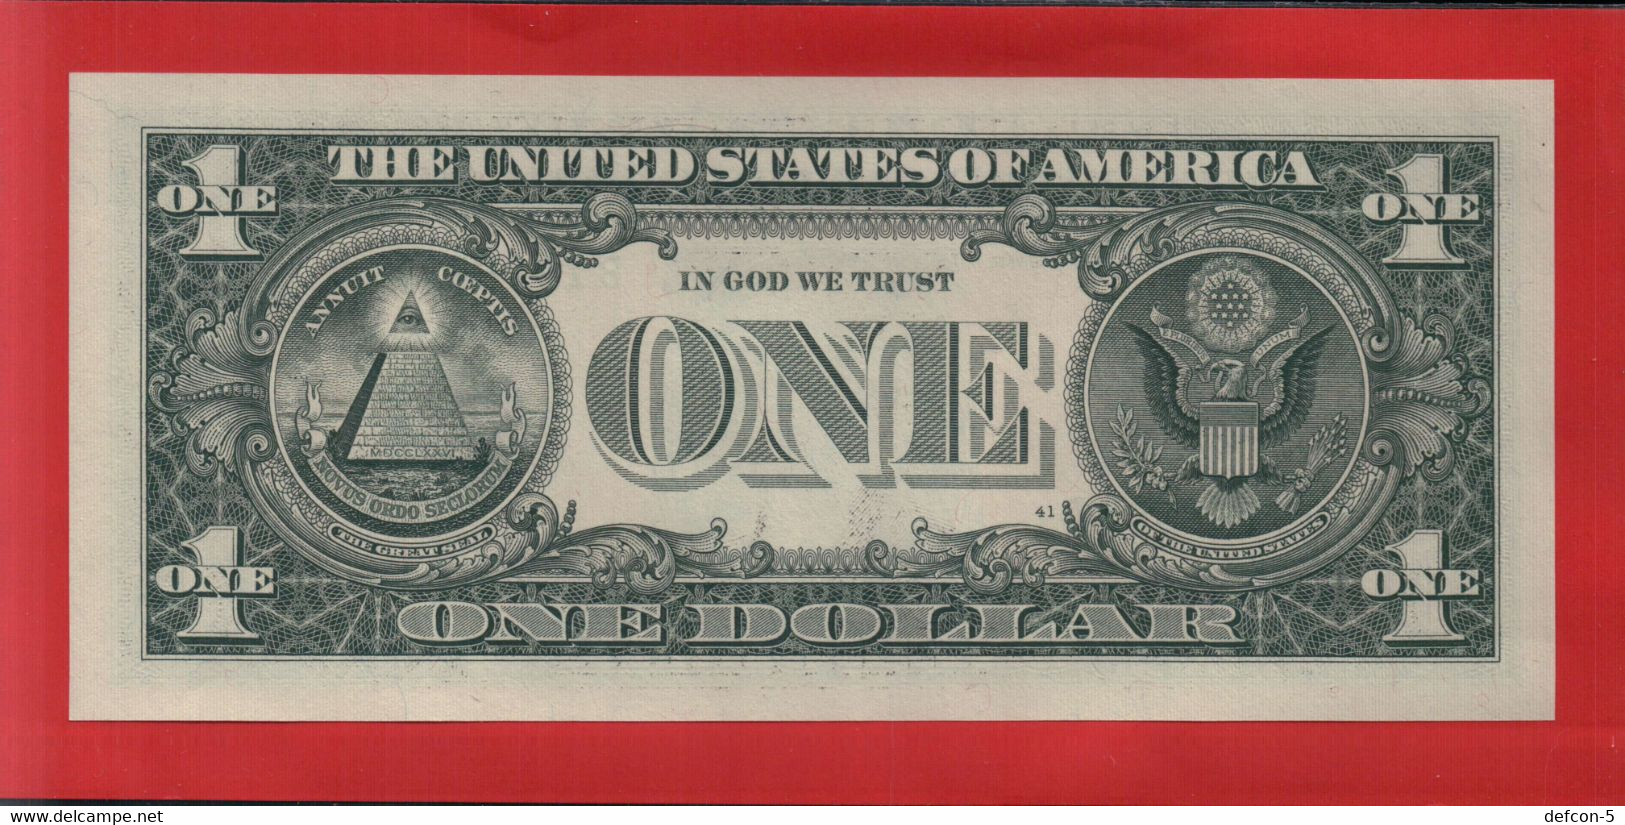 Mega Top-Rarität ! RADAR-Note: 1 US-Dollar [2017] > B19366391D < {$023-RDR1} - Nationale Valuta